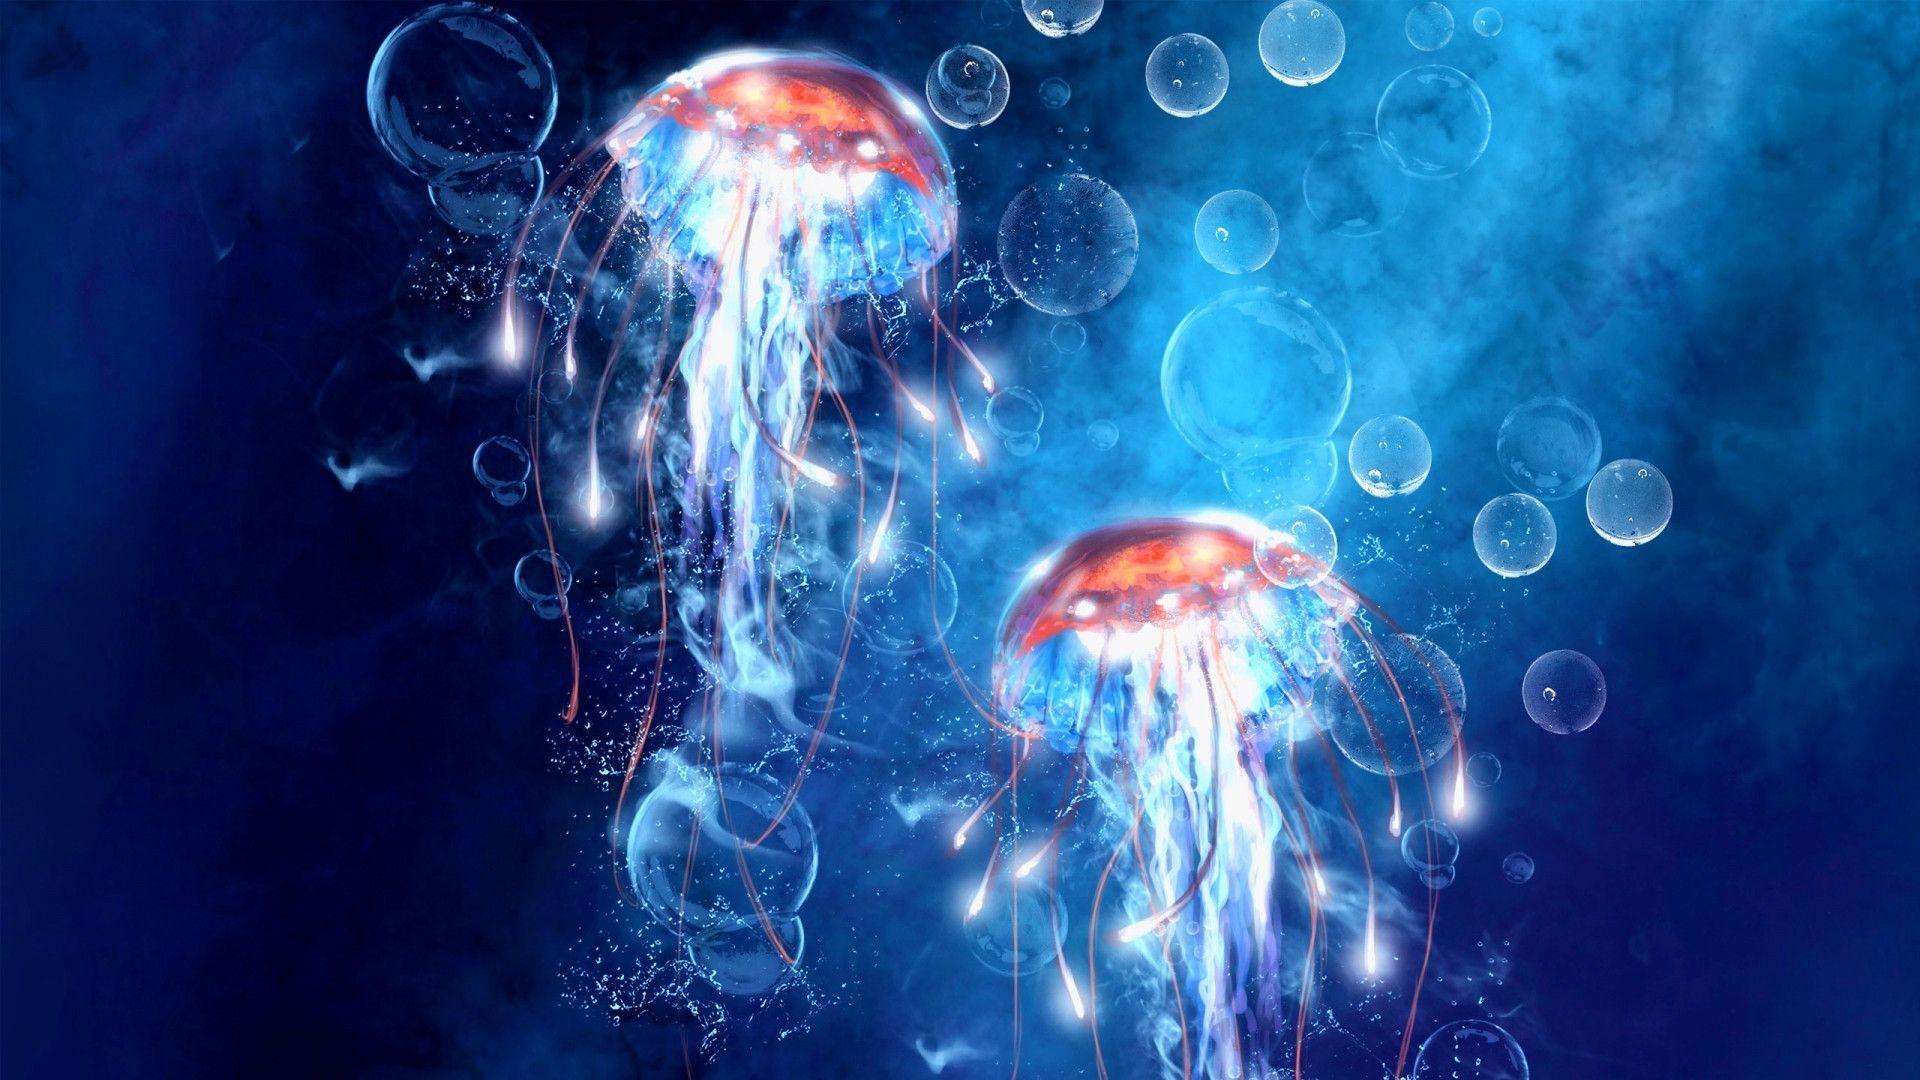 Jellyfish Wallpaper Android Jellyfish Wallpaper